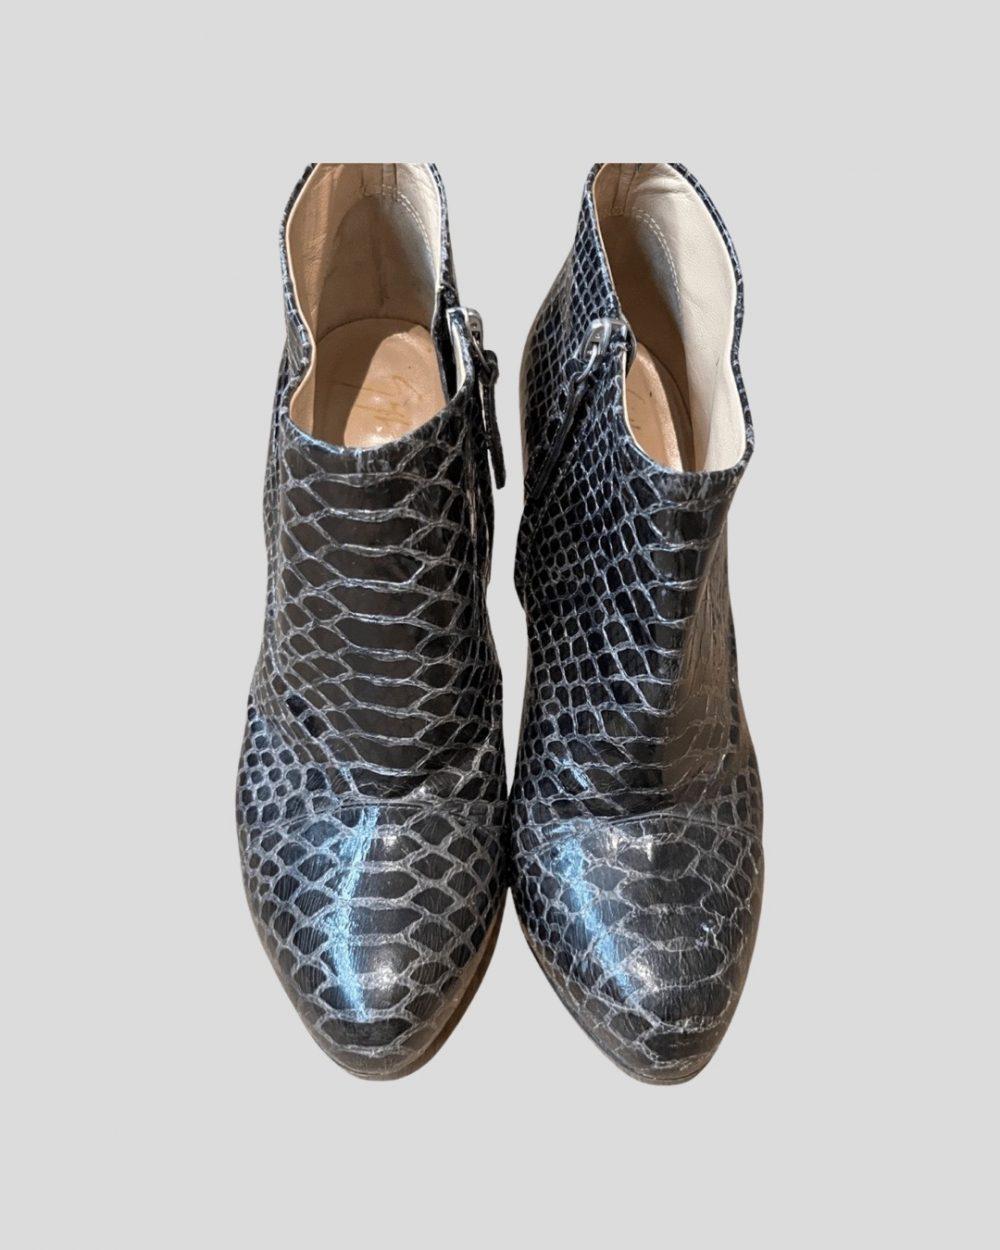 black-snakeskin-heeled-ankle-boot-onrotate